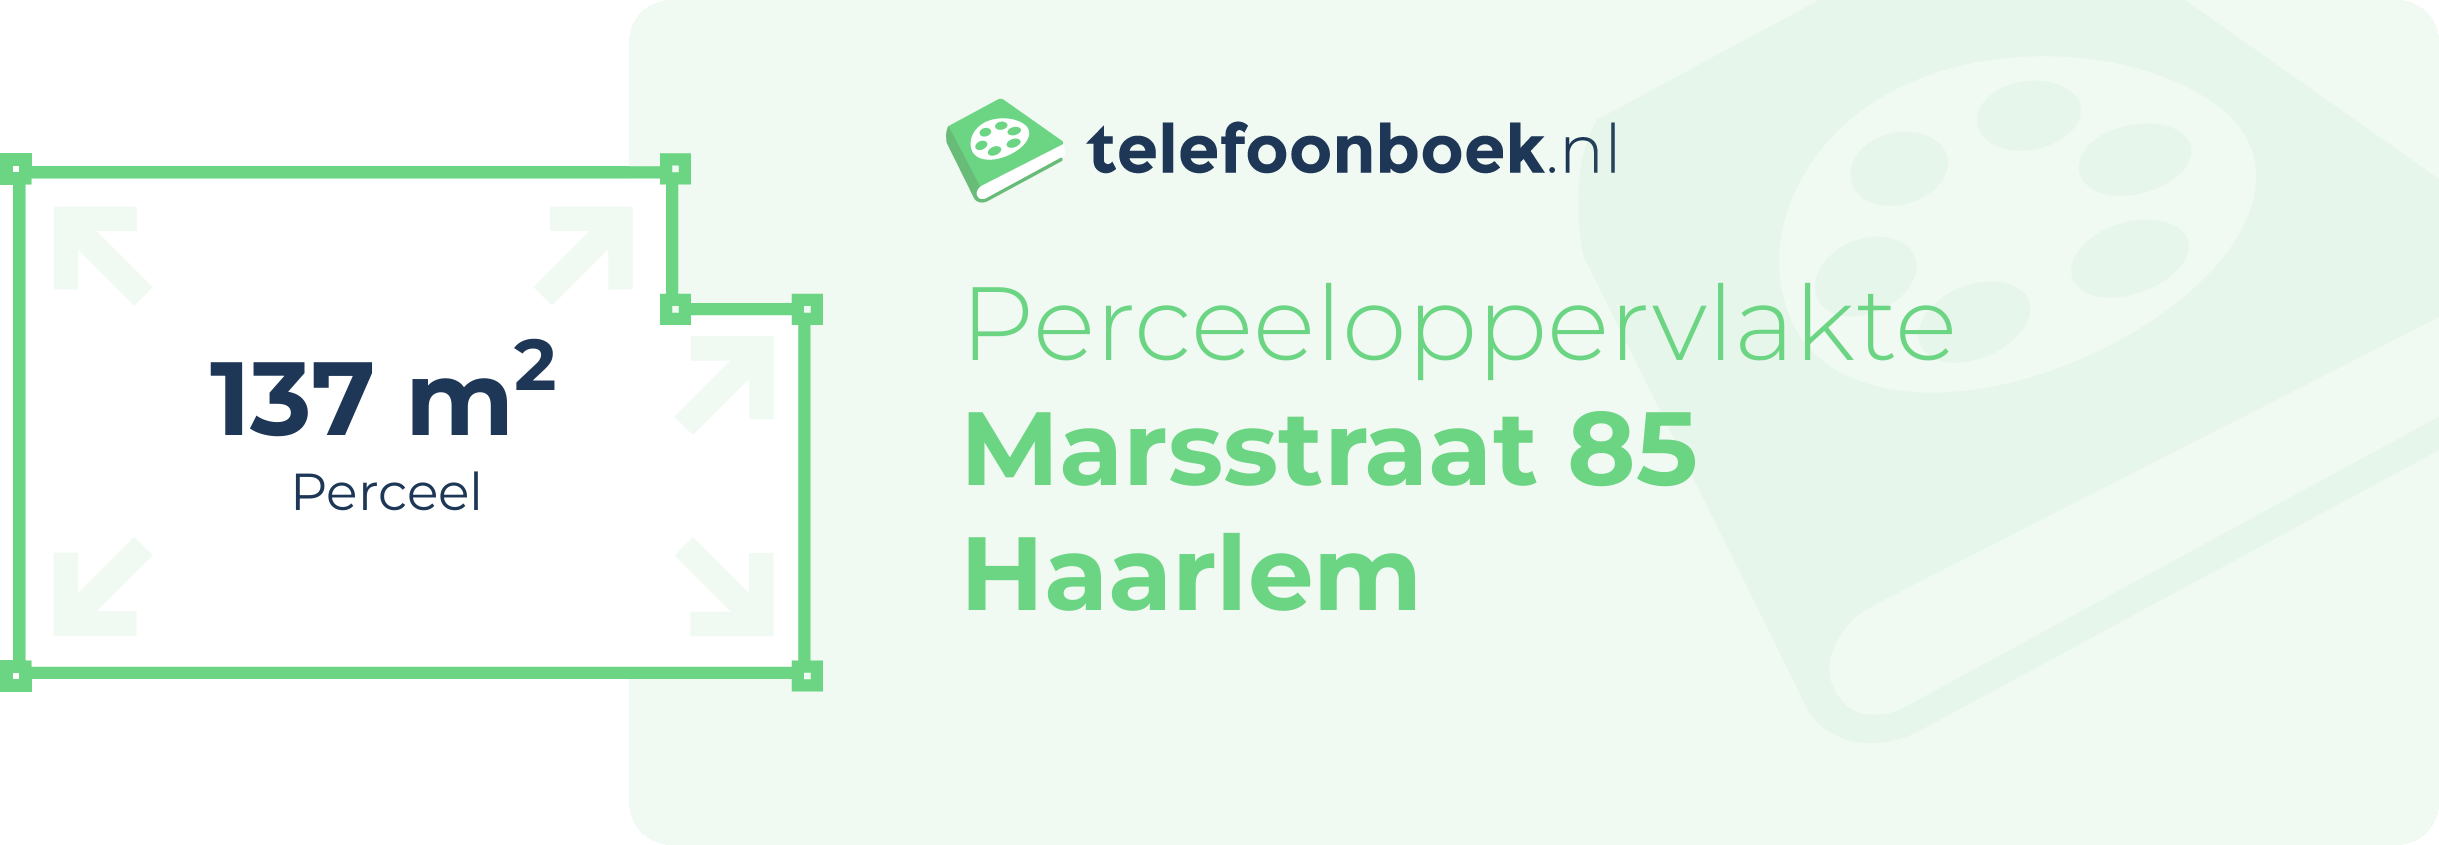 Perceeloppervlakte Marsstraat 85 Haarlem